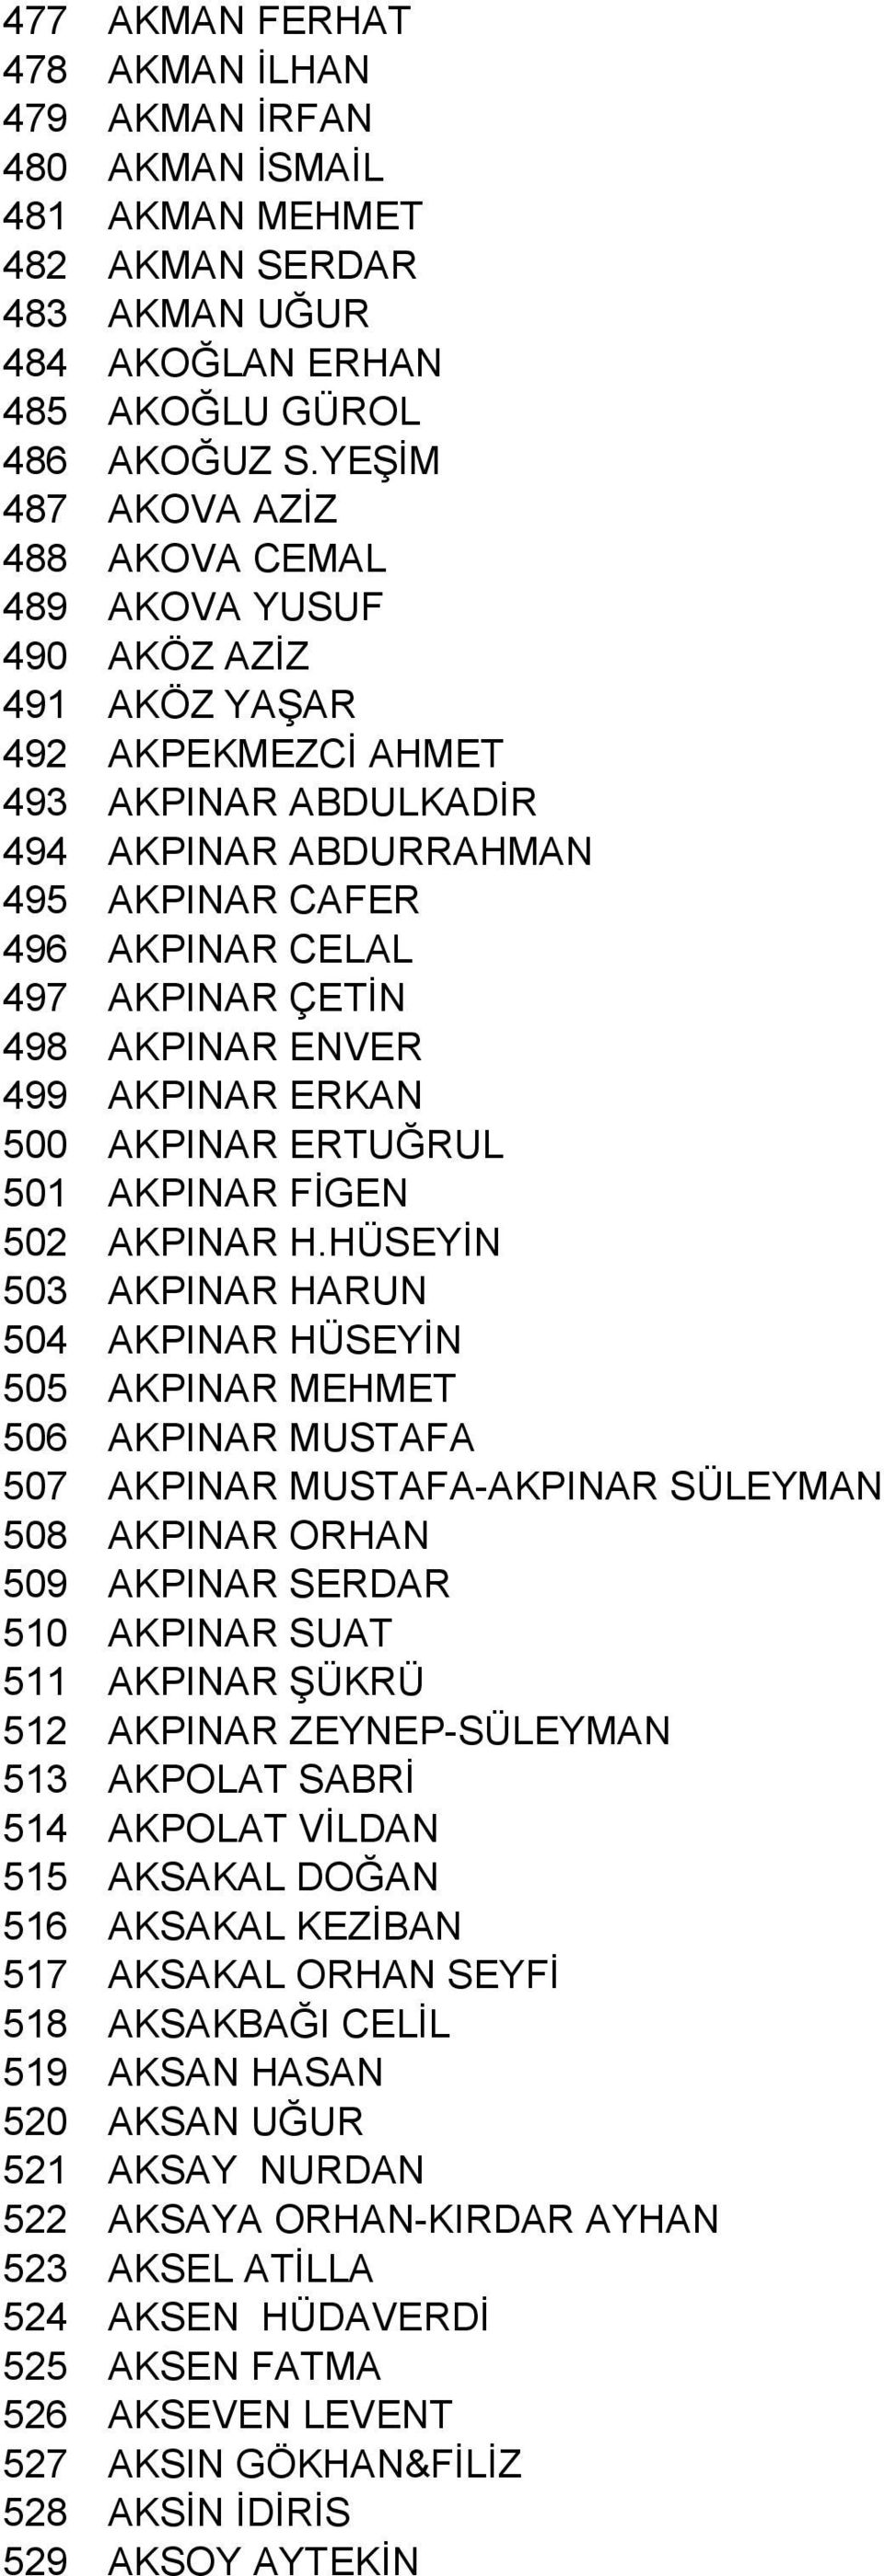 ÇETİN 498 AKPINAR ENVER 499 AKPINAR ERKAN 500 AKPINAR ERTUĞRUL 501 AKPINAR FİGEN 502 AKPINAR H.